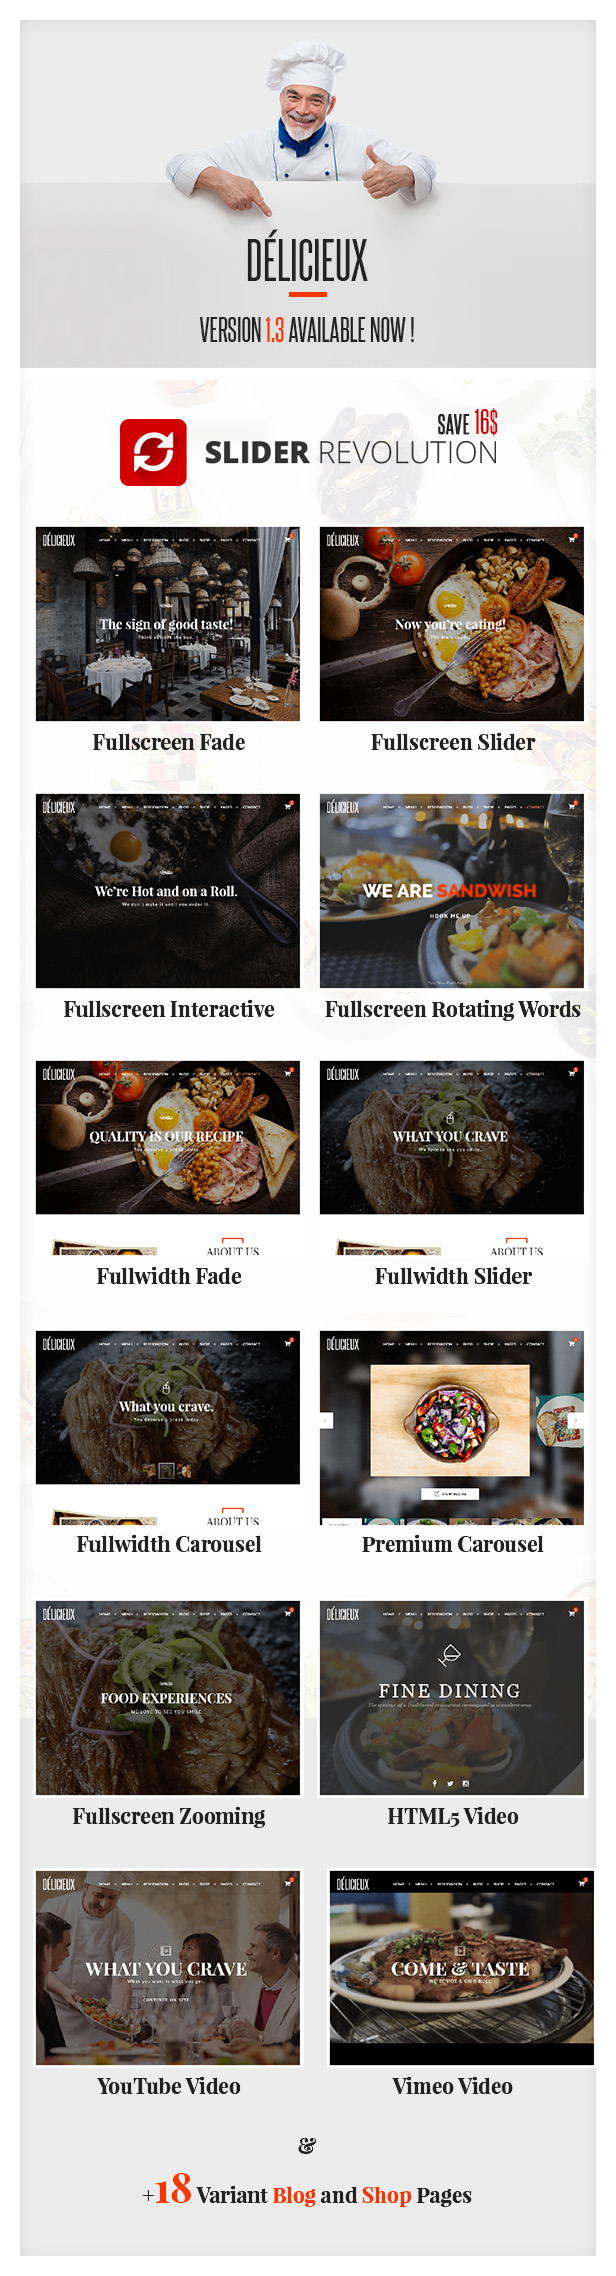 Delicieux - Exquisite Restaurant HTML5 Template - 6